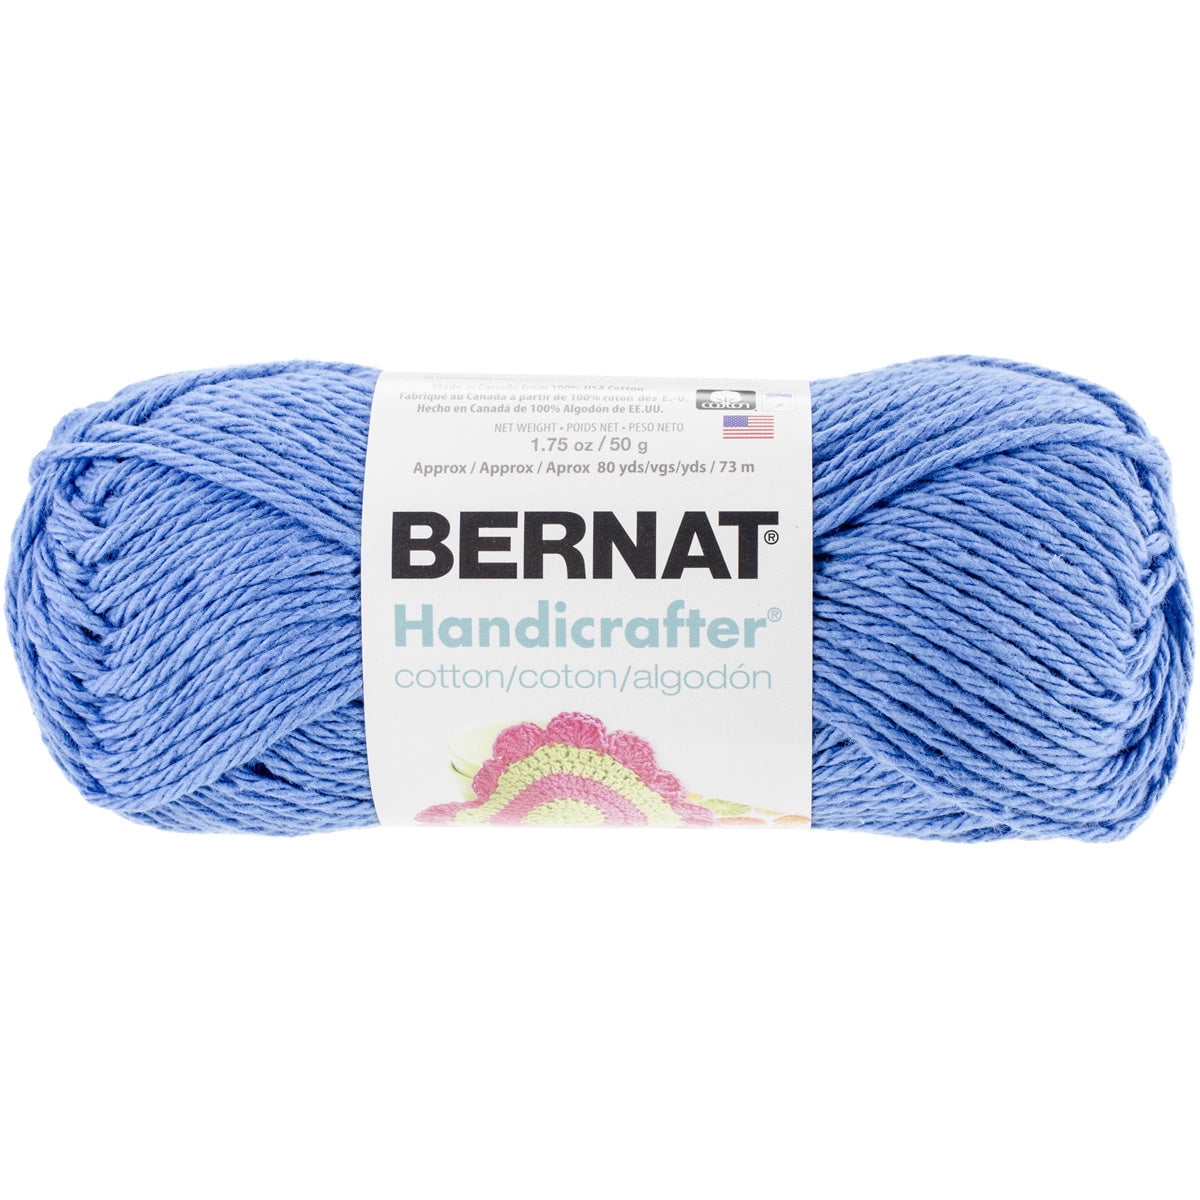 Bernat Handicrafter Cotton Yarn – 50g – Warm Brown – Yarns by